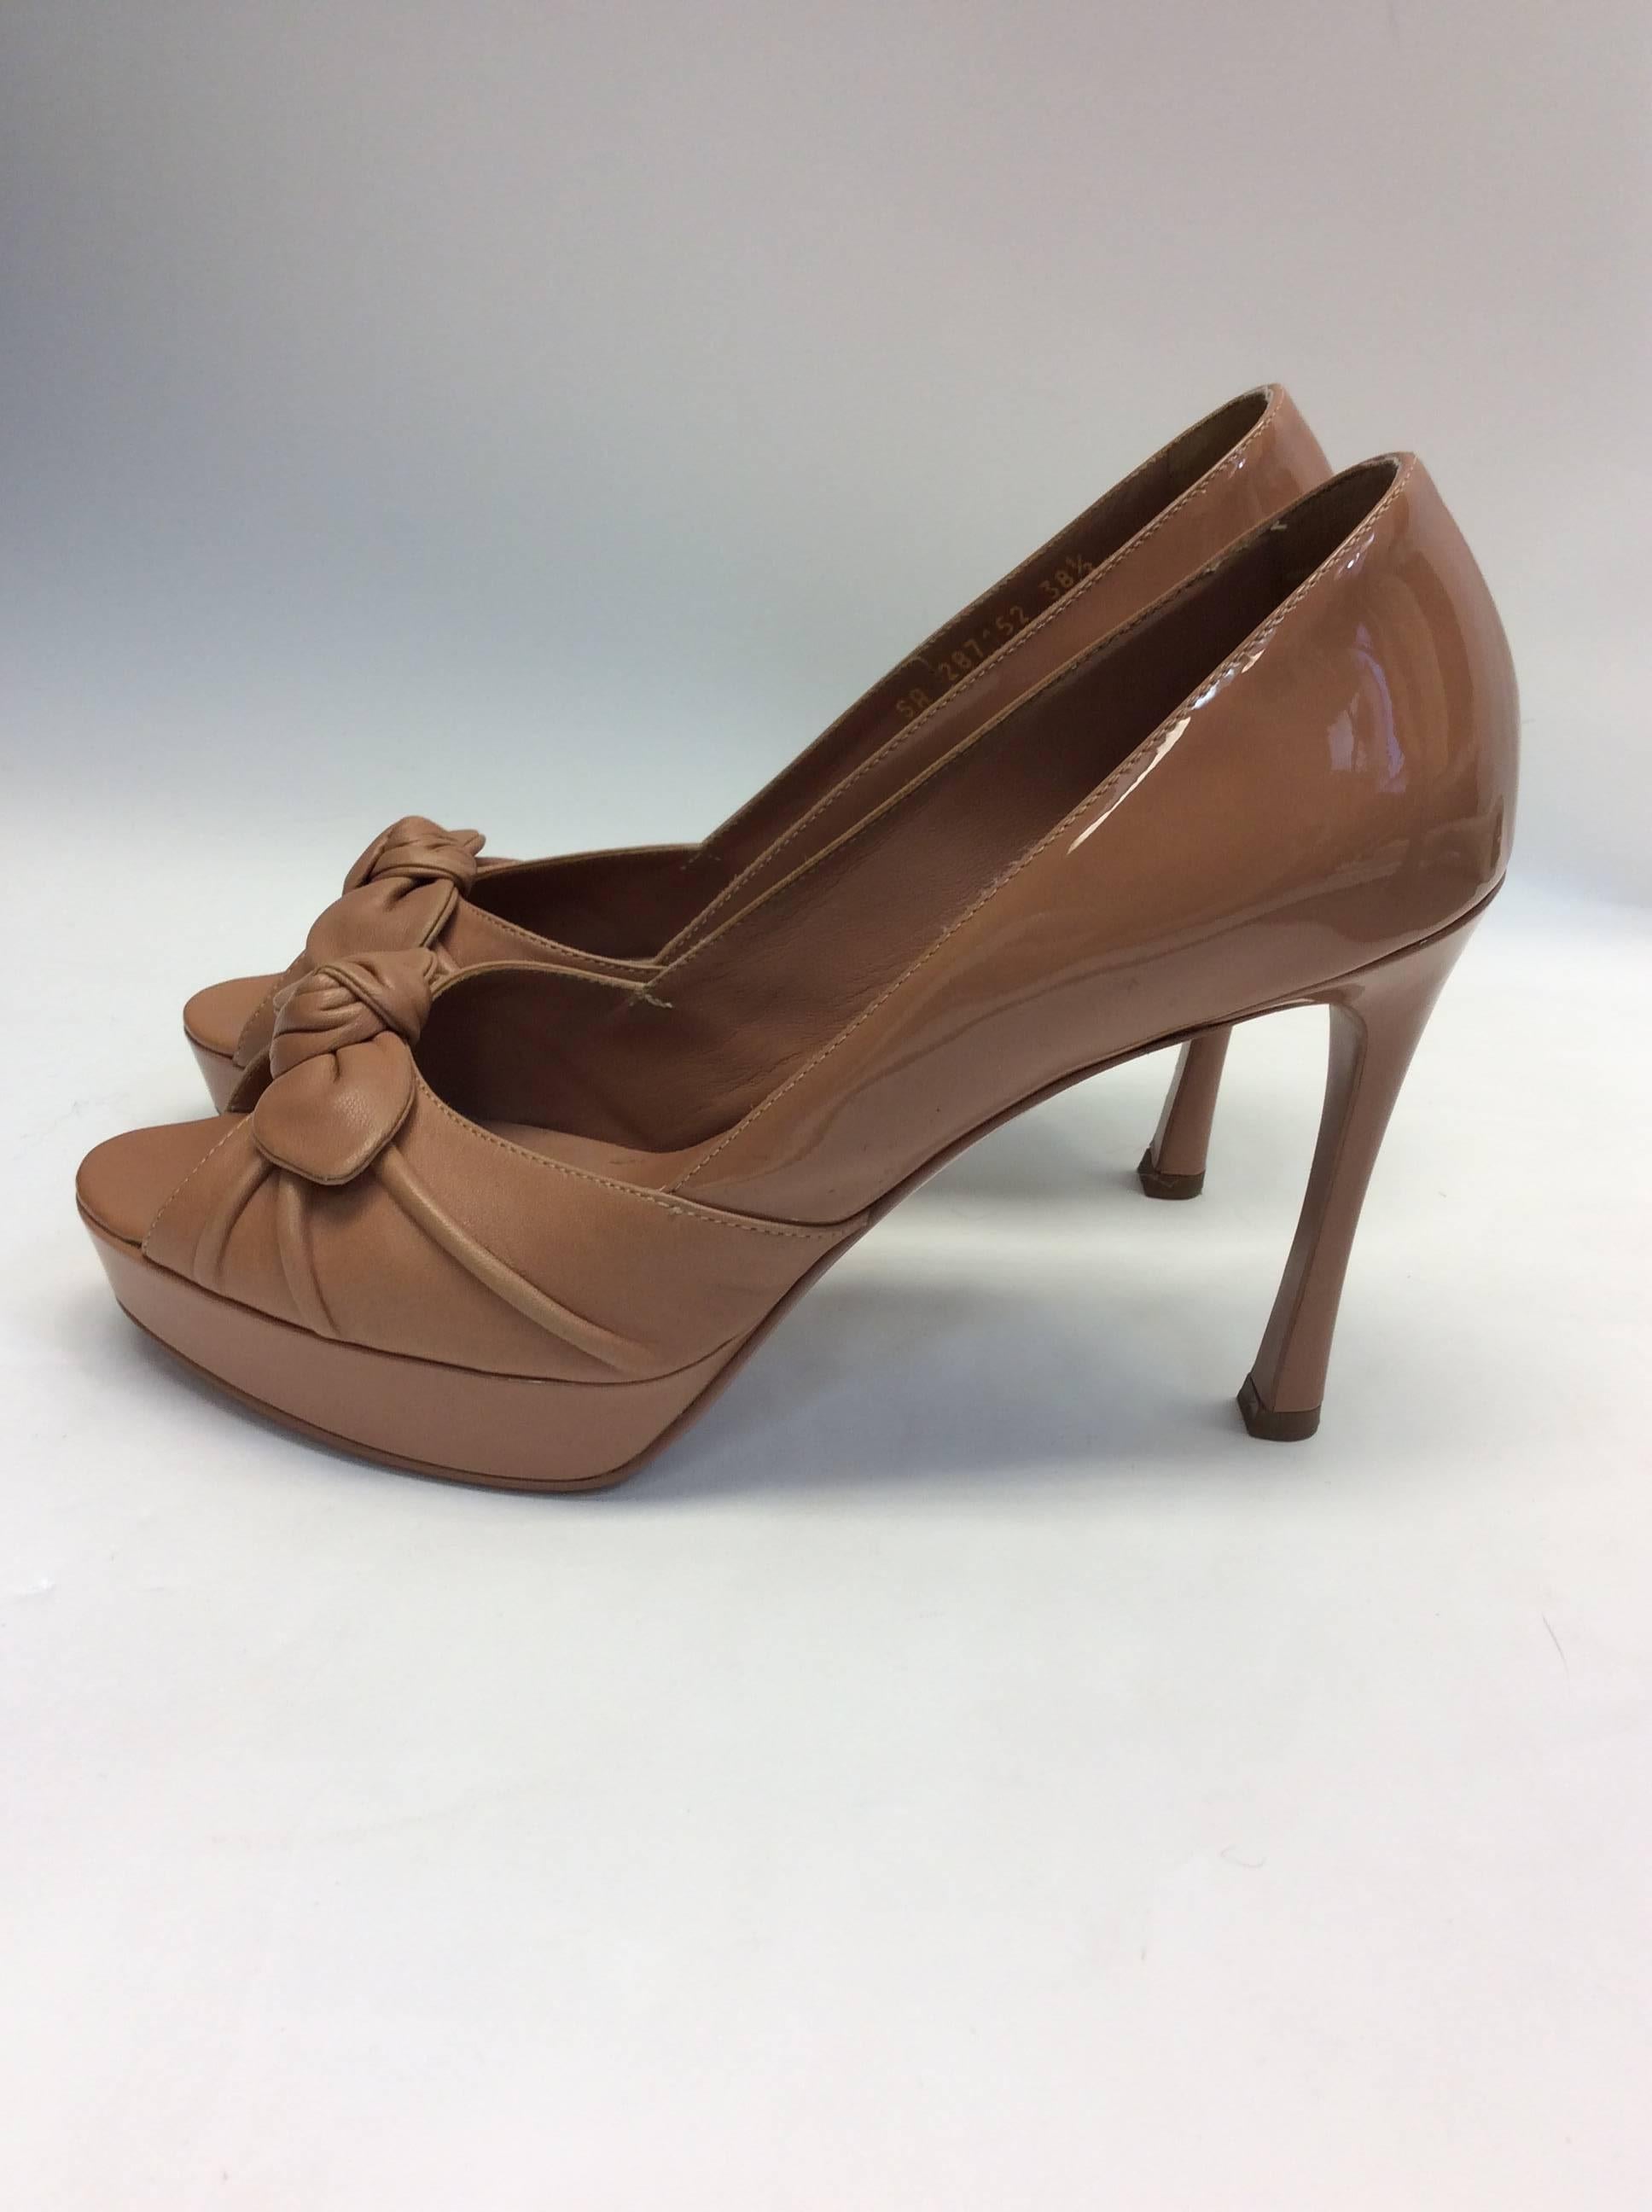 Yves Saint Laurent Nude Patent Peep Toe Heels
$299
Size 38.5 
Made in Italy
4.25 inch heel